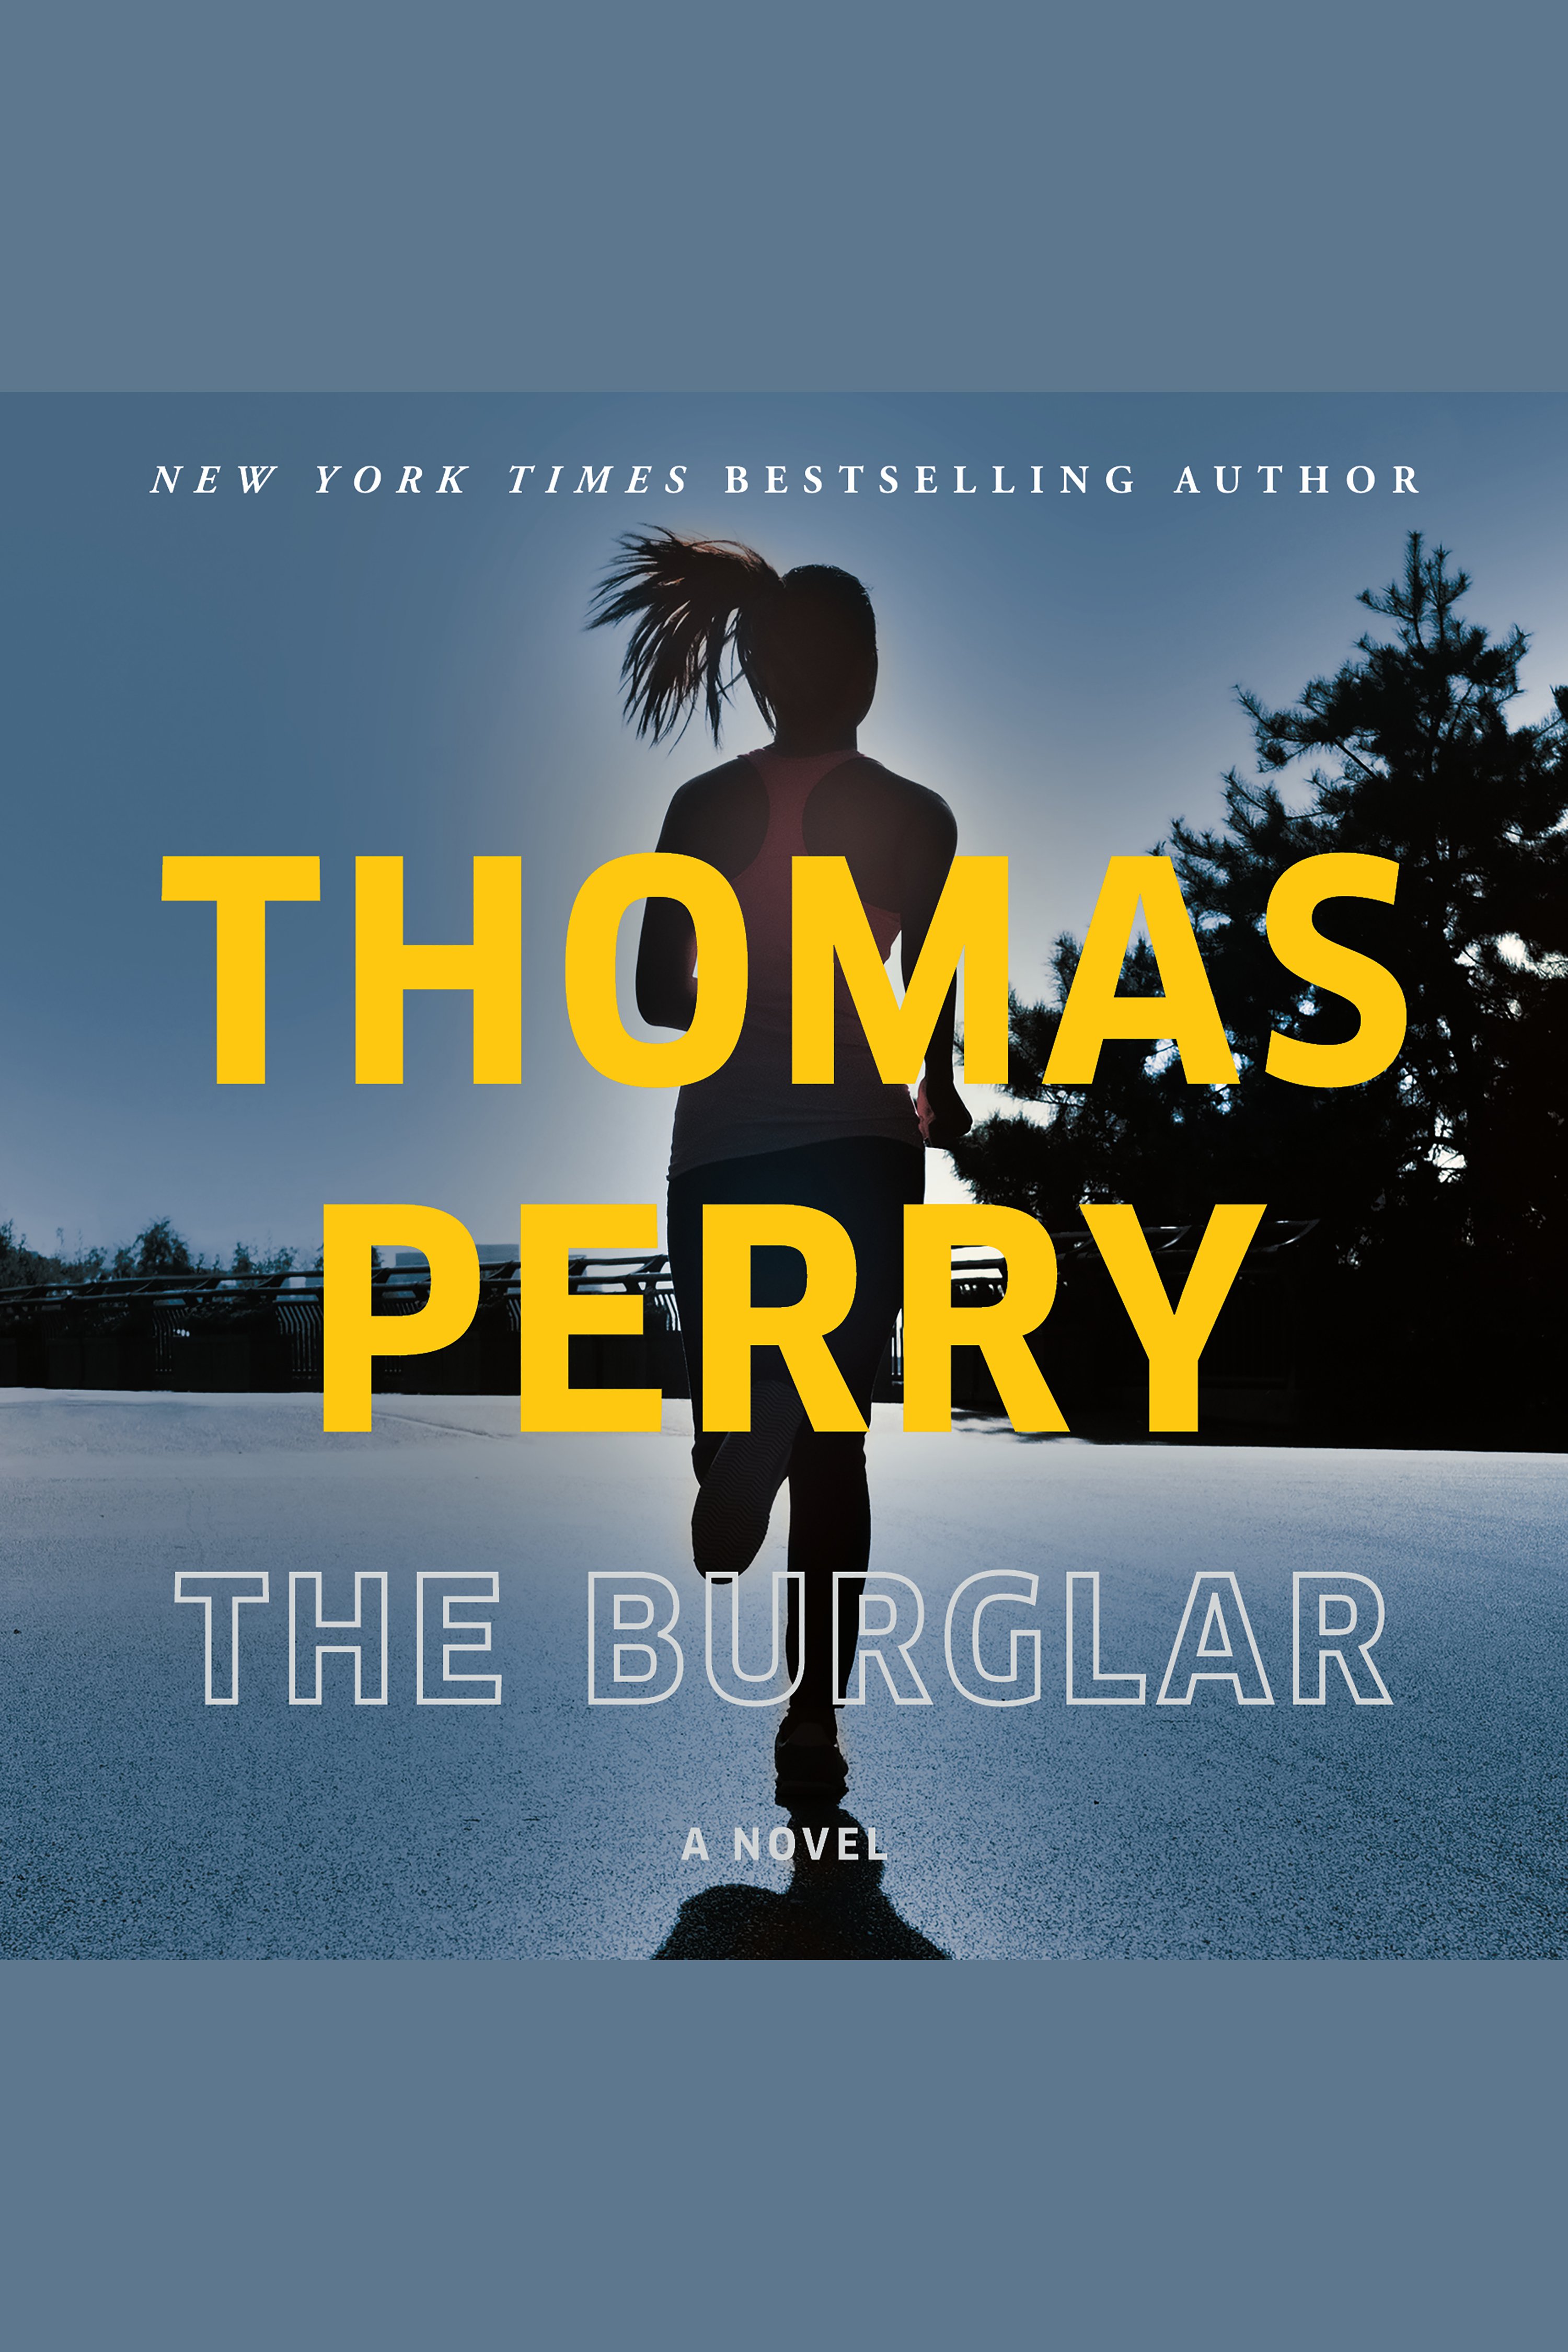 The burglar cover image